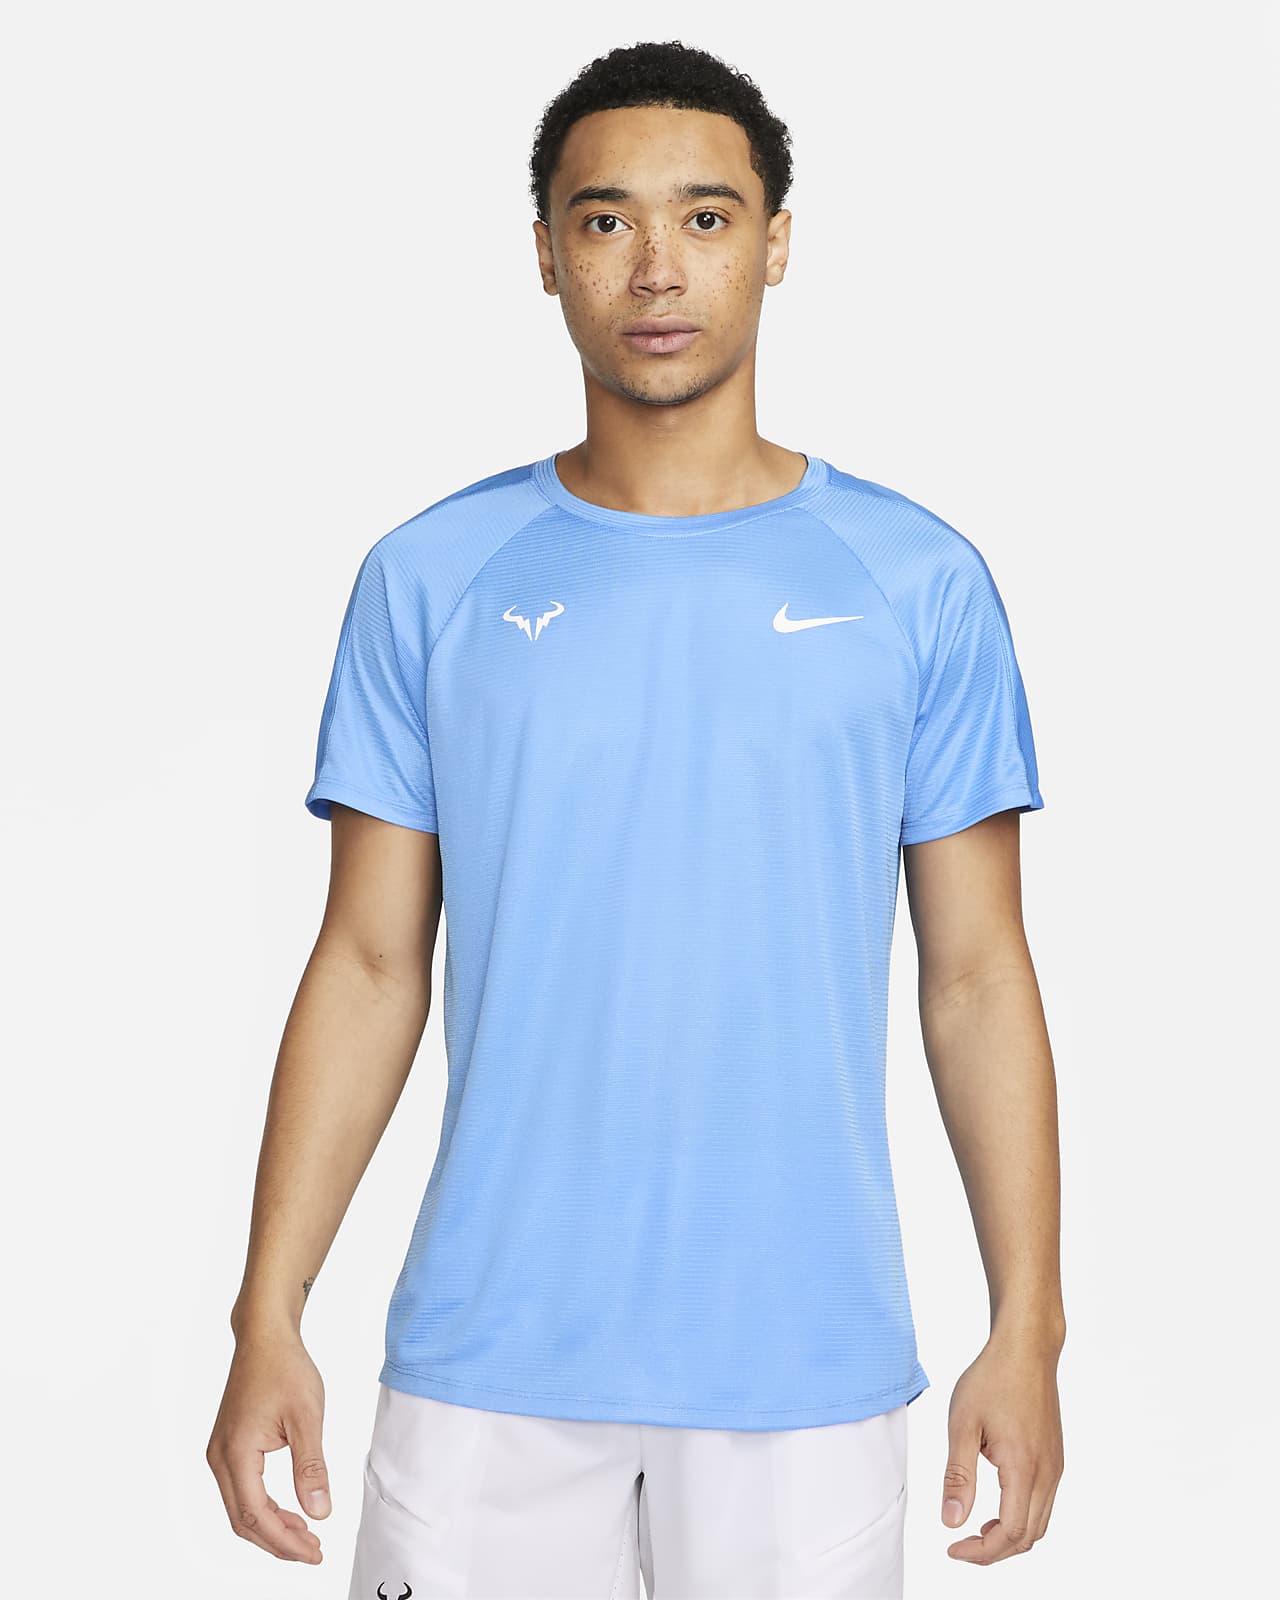 Rafa Challenger Men's Dri-FIT Short-Sleeve Tennis Top. Nike.com